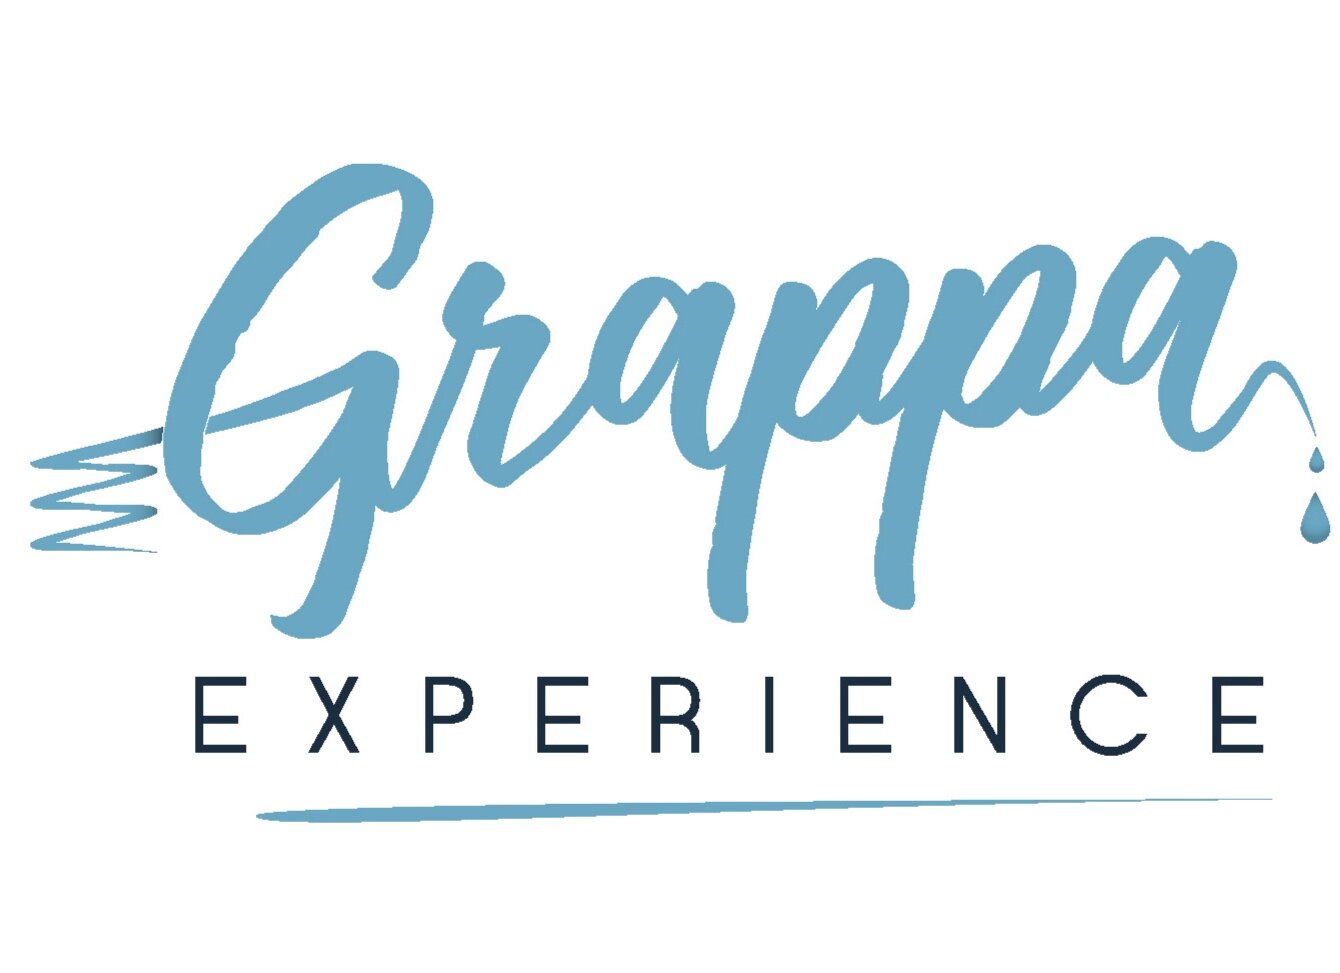 grappa experience logo.jpg